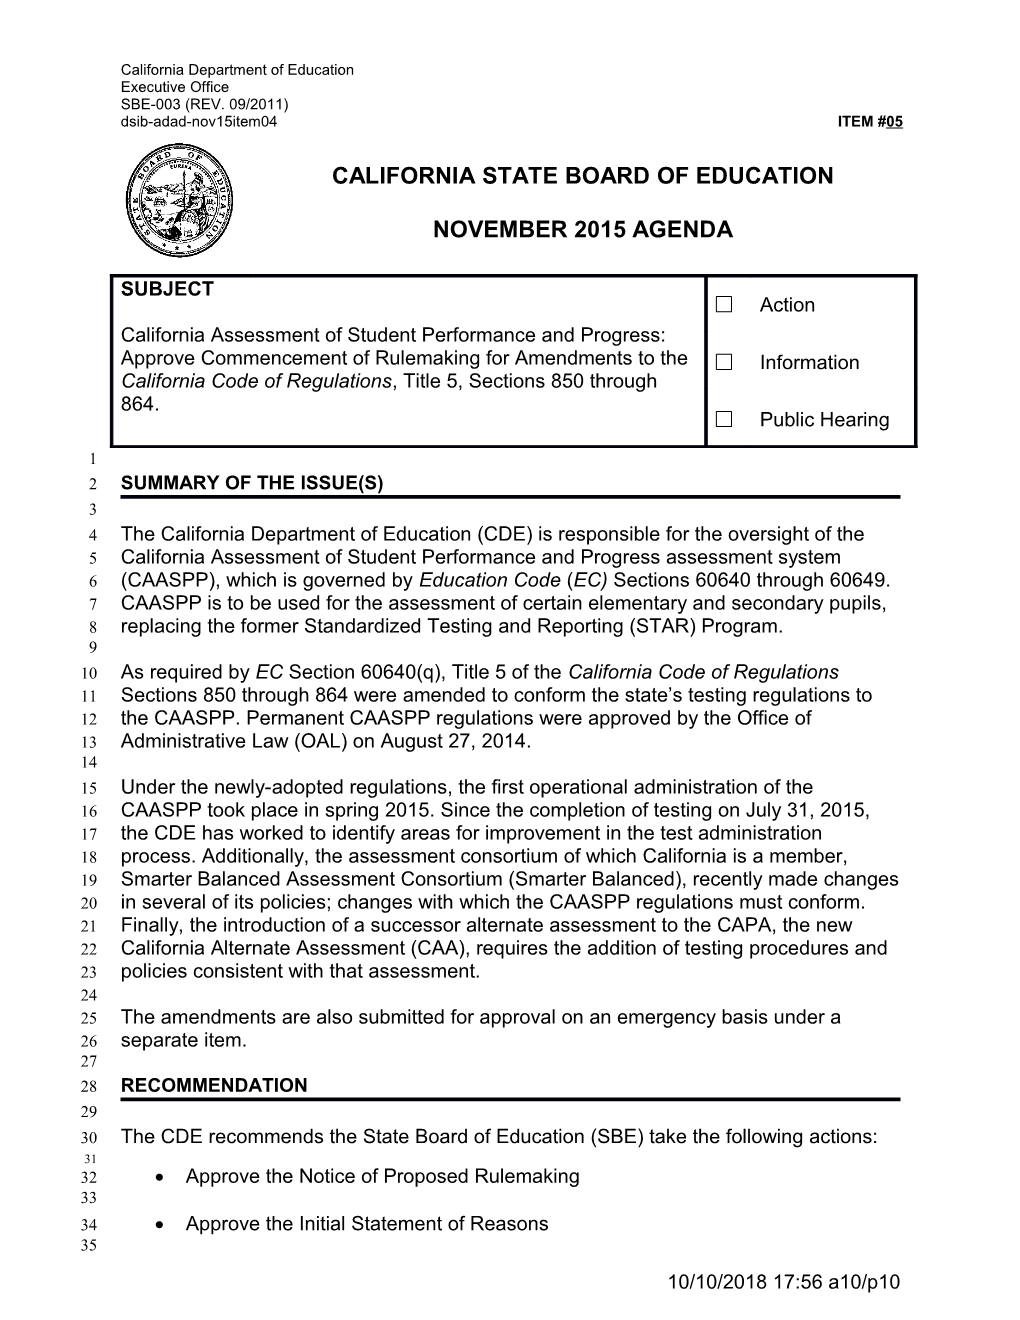 November 2015 Agenda Item 05 Revised - Meeting Agendas (CA State Board of Education)